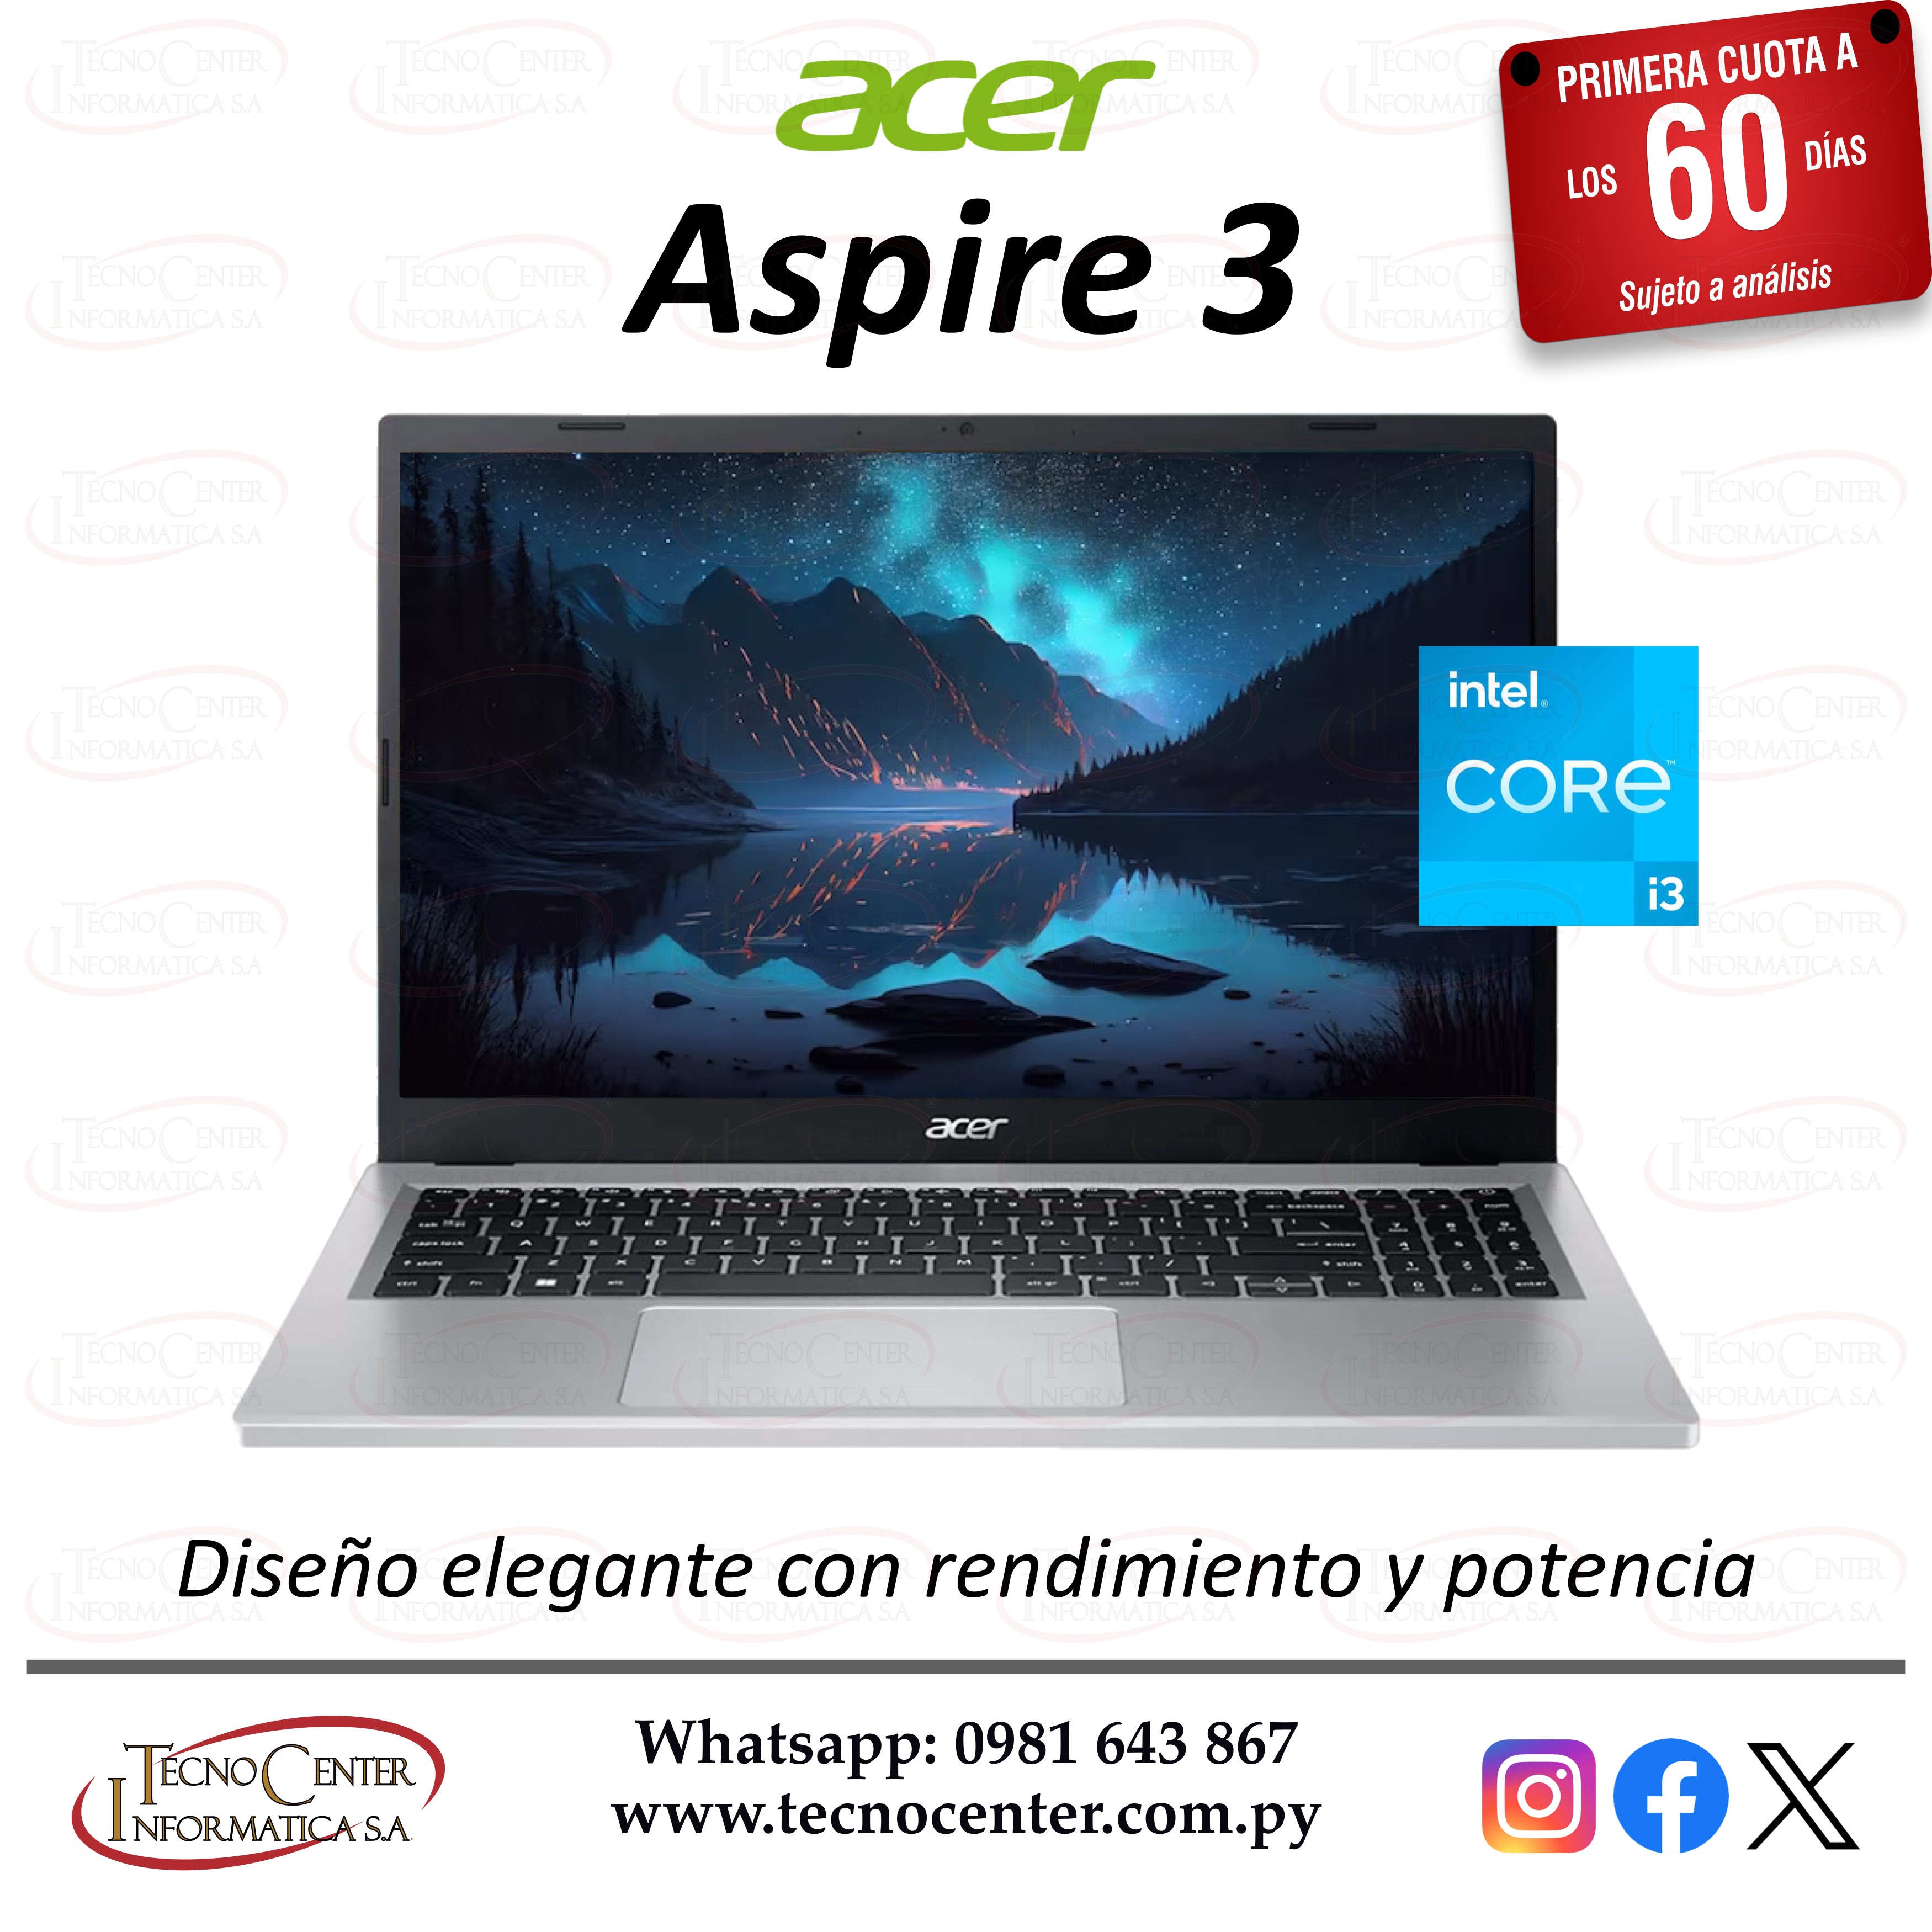 Notebook Acer Aspire 3 Intel Core i3